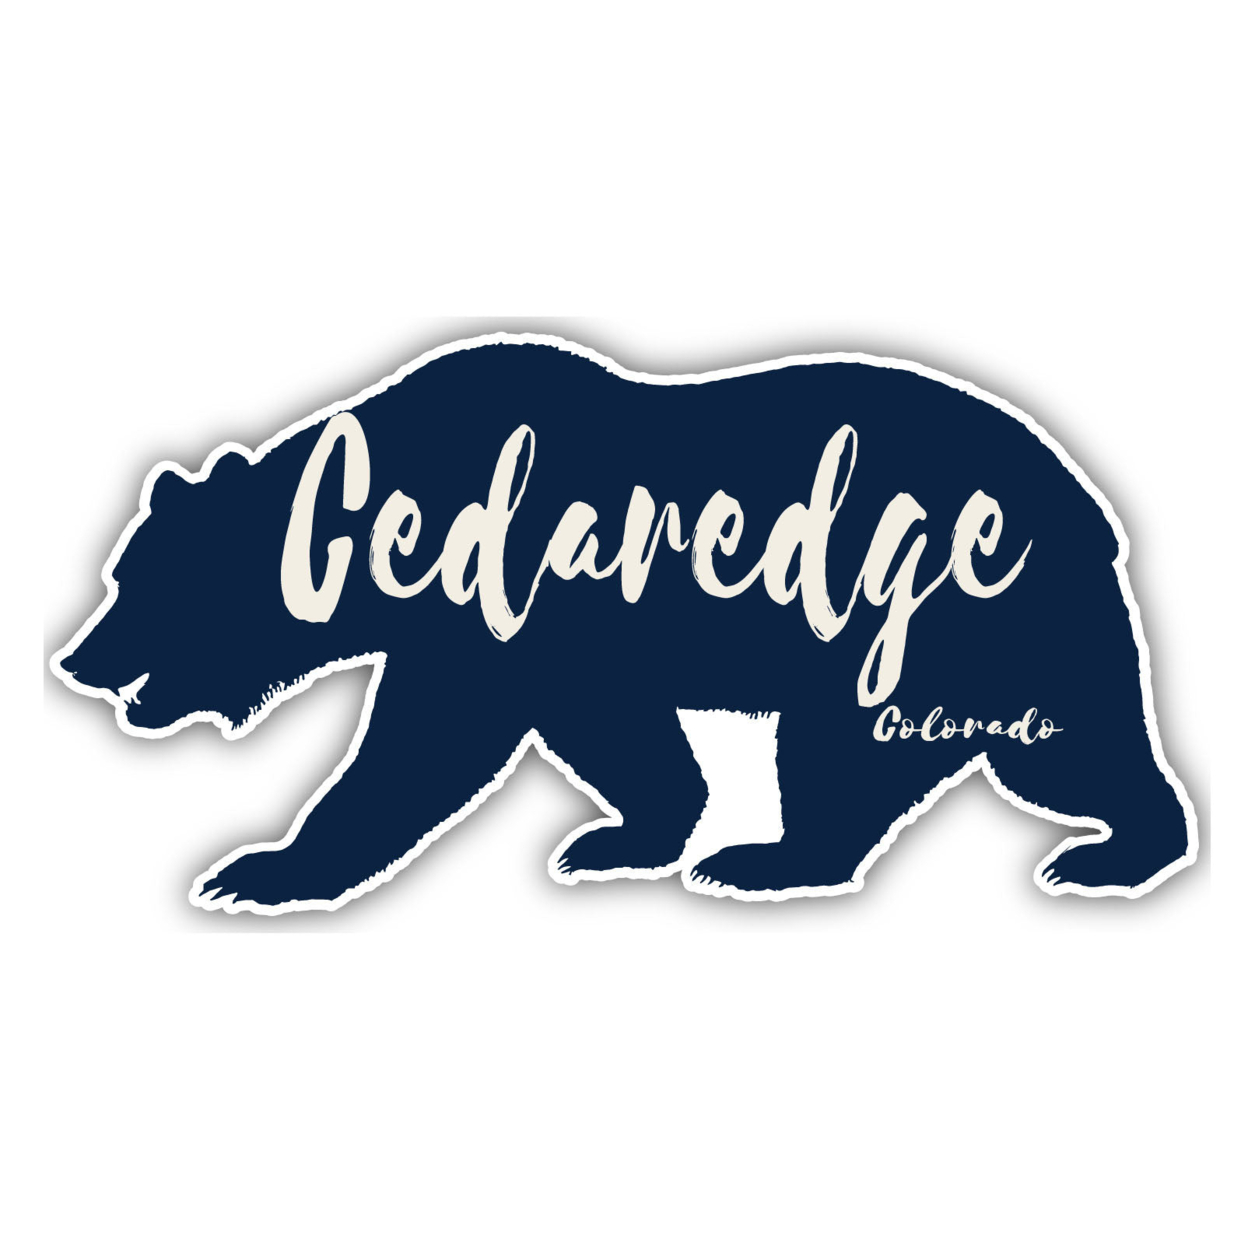 Cedaredge Colorado Souvenir Decorative Stickers (Choose Theme And Size) - 4-Pack, 8-Inch, Bear